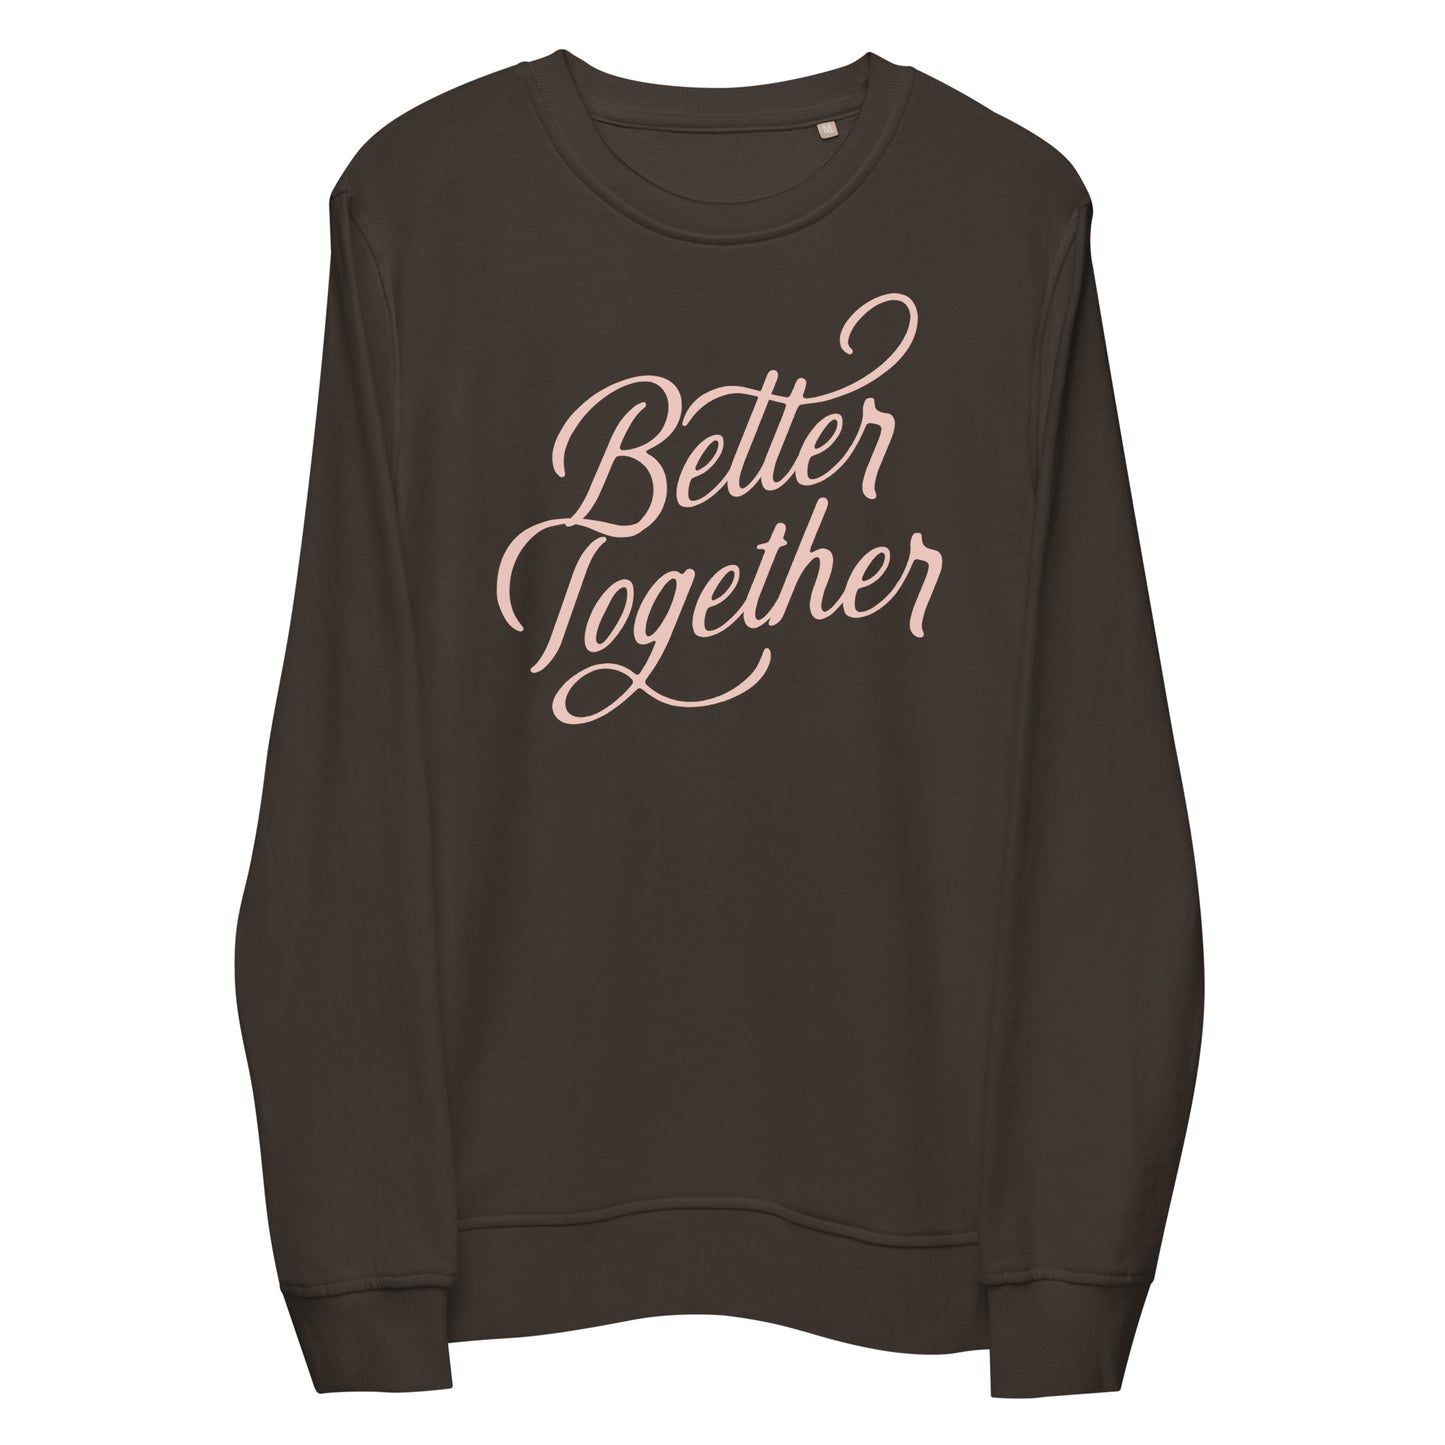 Better Together Sweatshirt for best friends